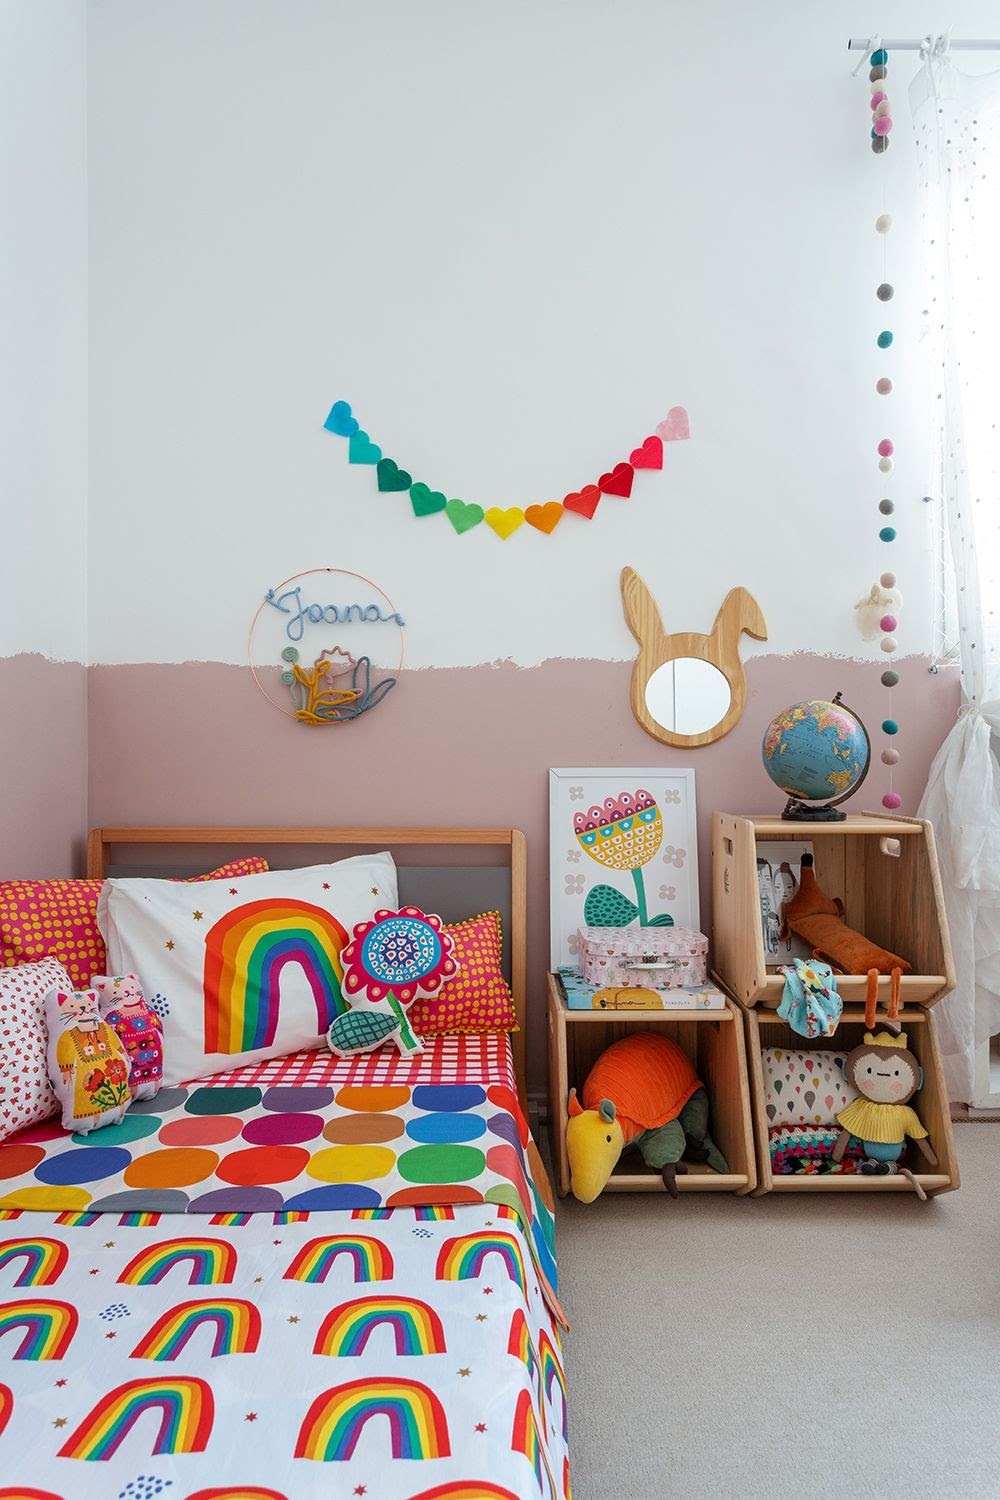 Cute Koala And Rainbow-01 Tapestry, Bedroom Aesthetics Home Decor Wall  Hanging Party Wall Art 60x90 : : Home